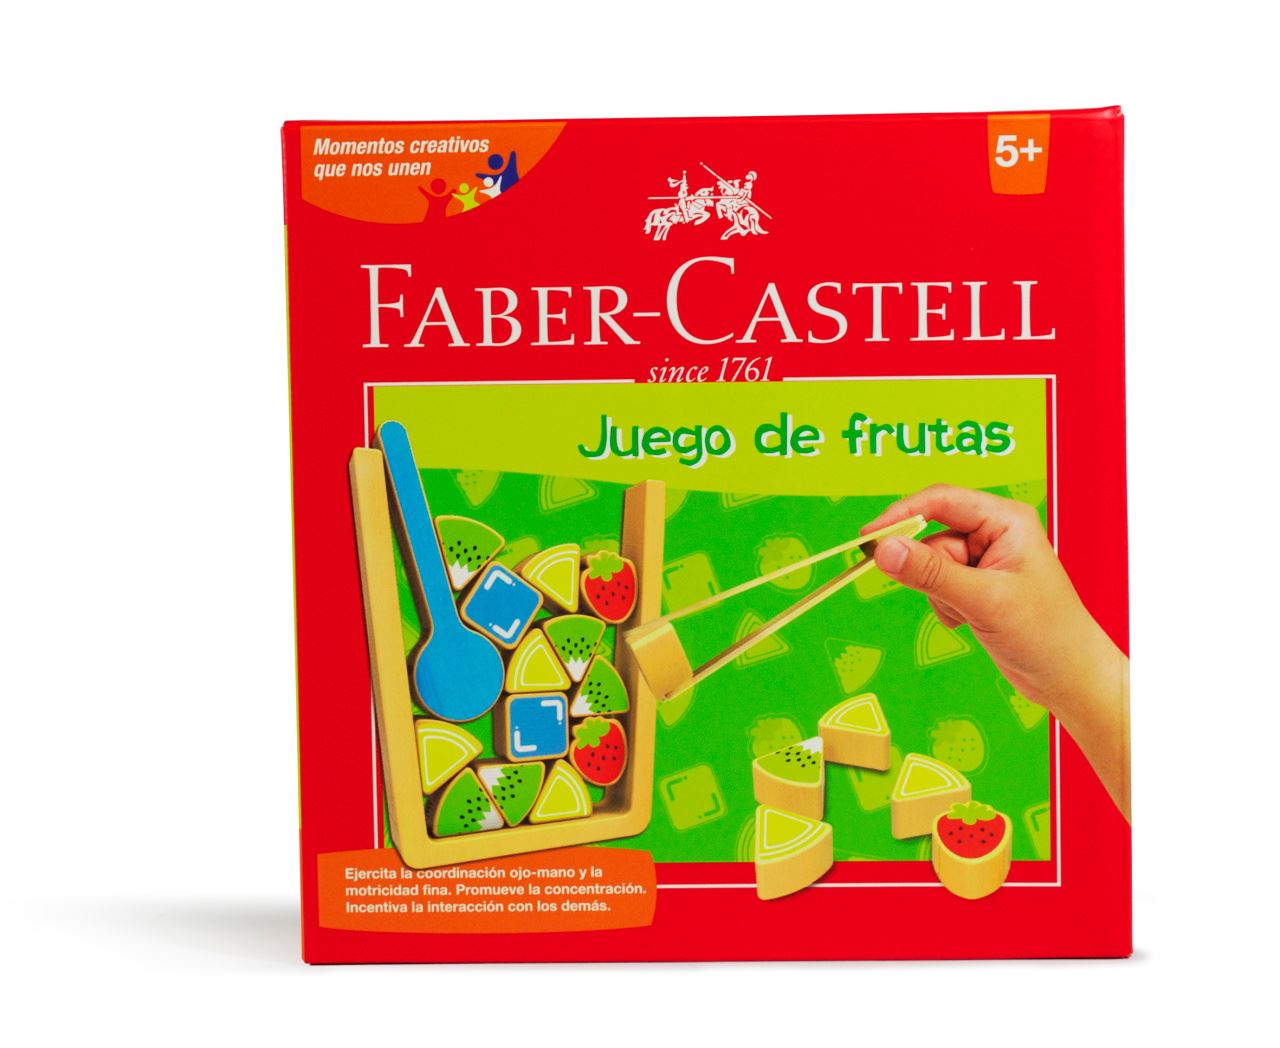 Faber-Castell - Set Juego de frutas